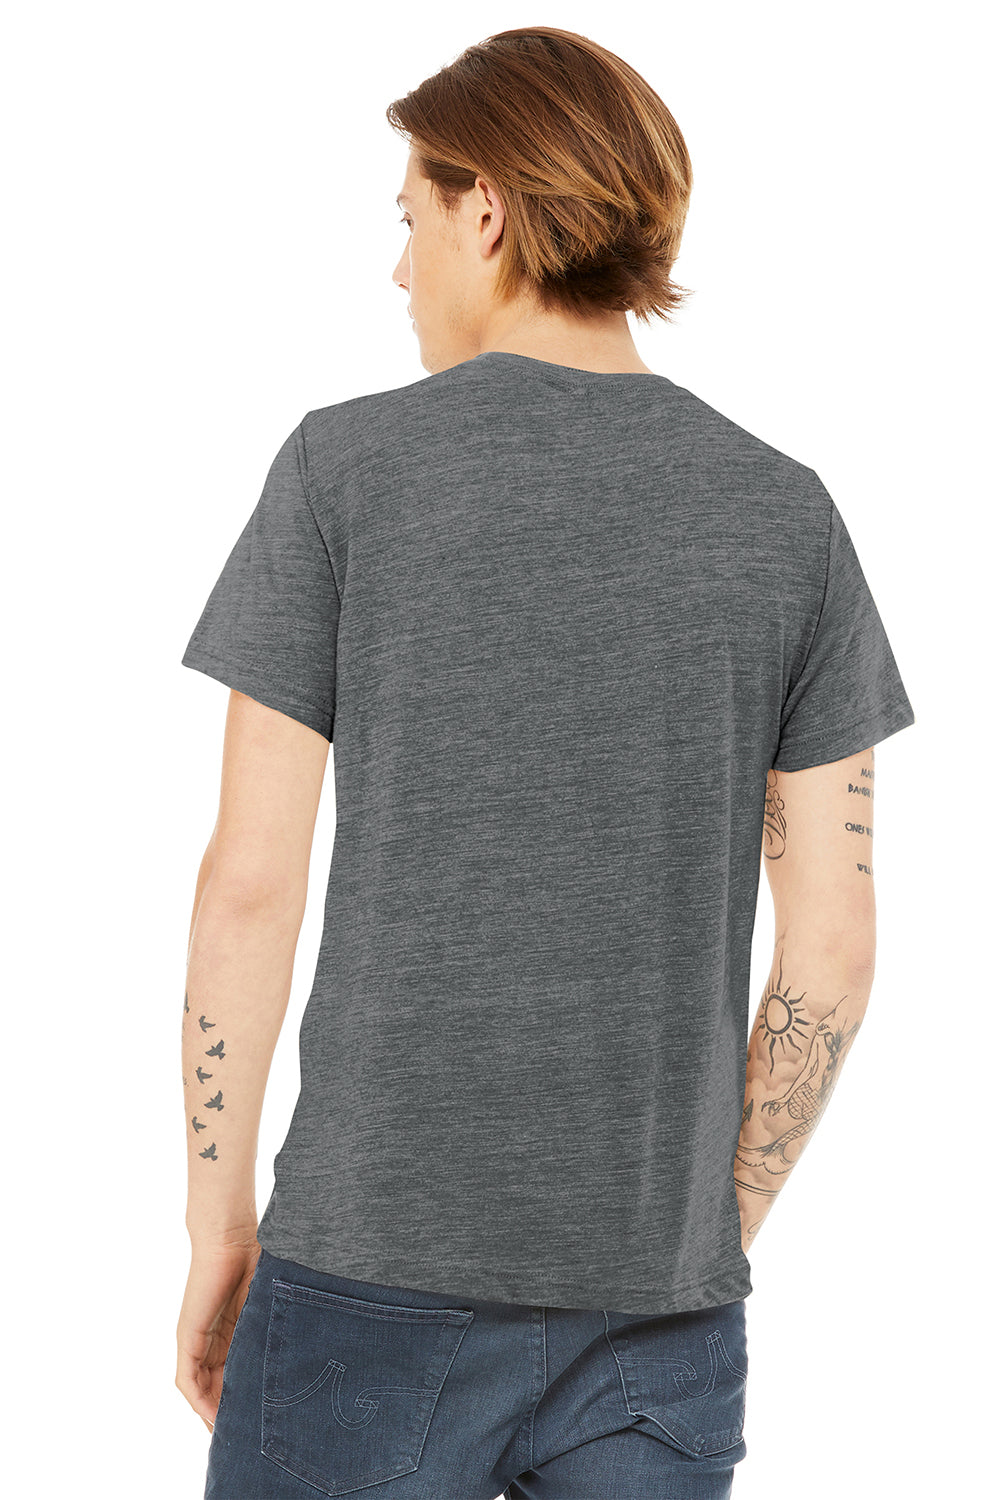 Bella + Canvas BC3650/3650 Mens Short Sleeve Crewneck T-Shirt Asphalt Grey Slub Model Back